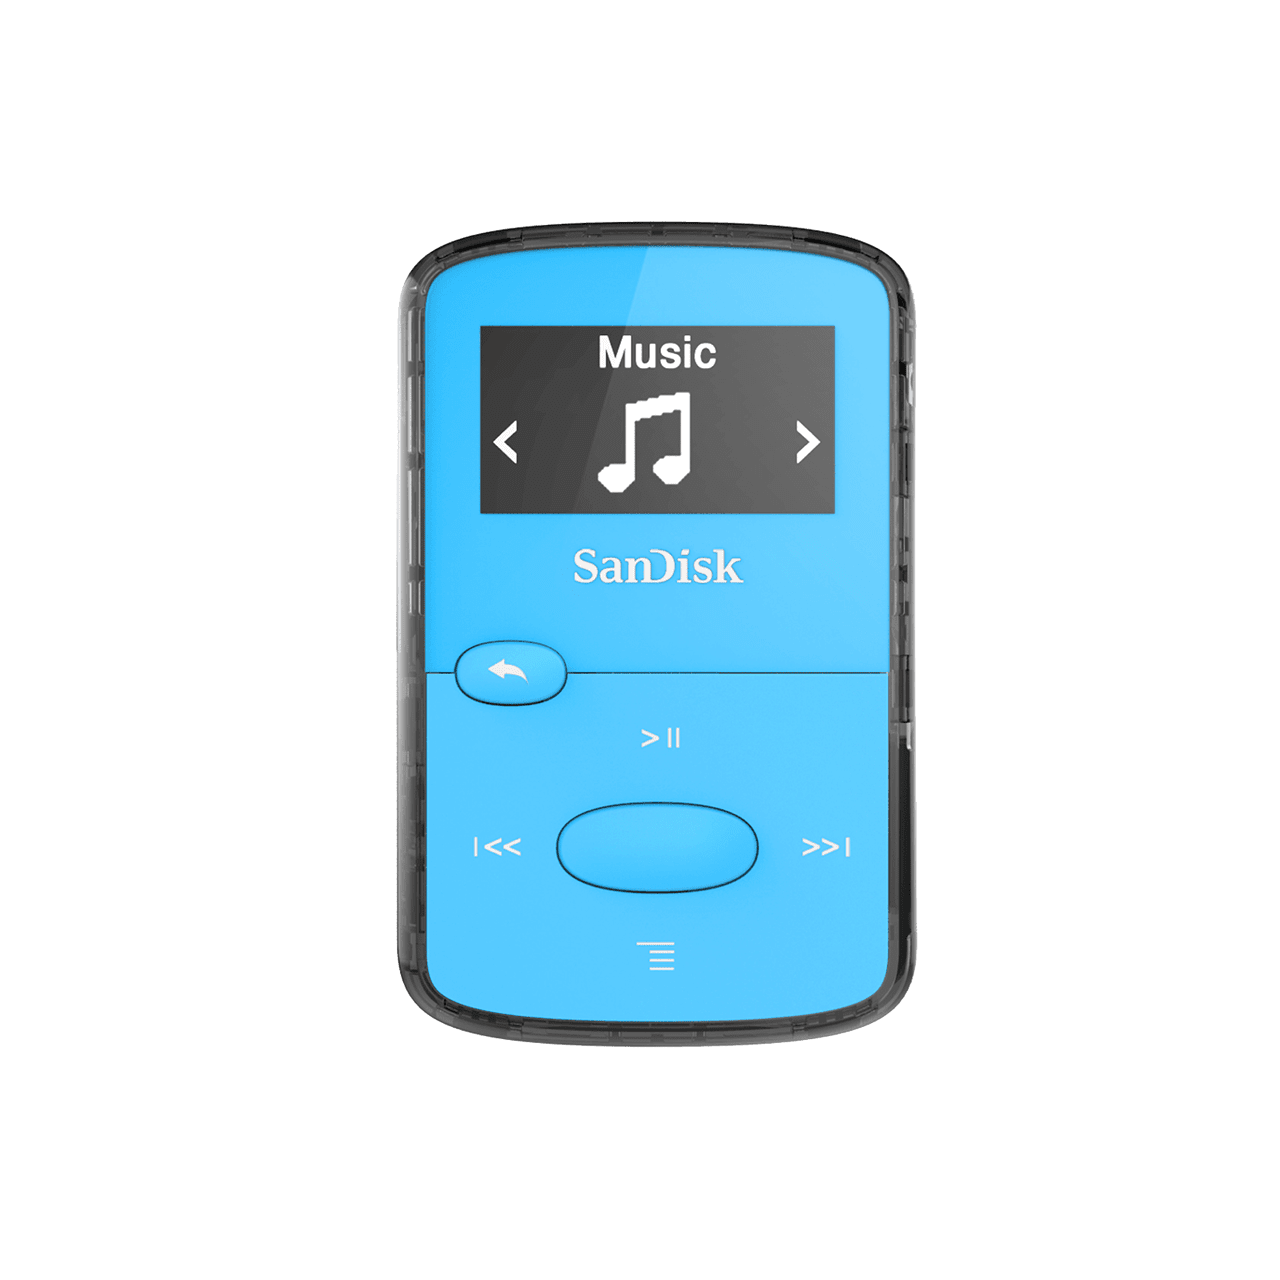 Sandisk Clip Jam Mp3 Player Western Digital Store